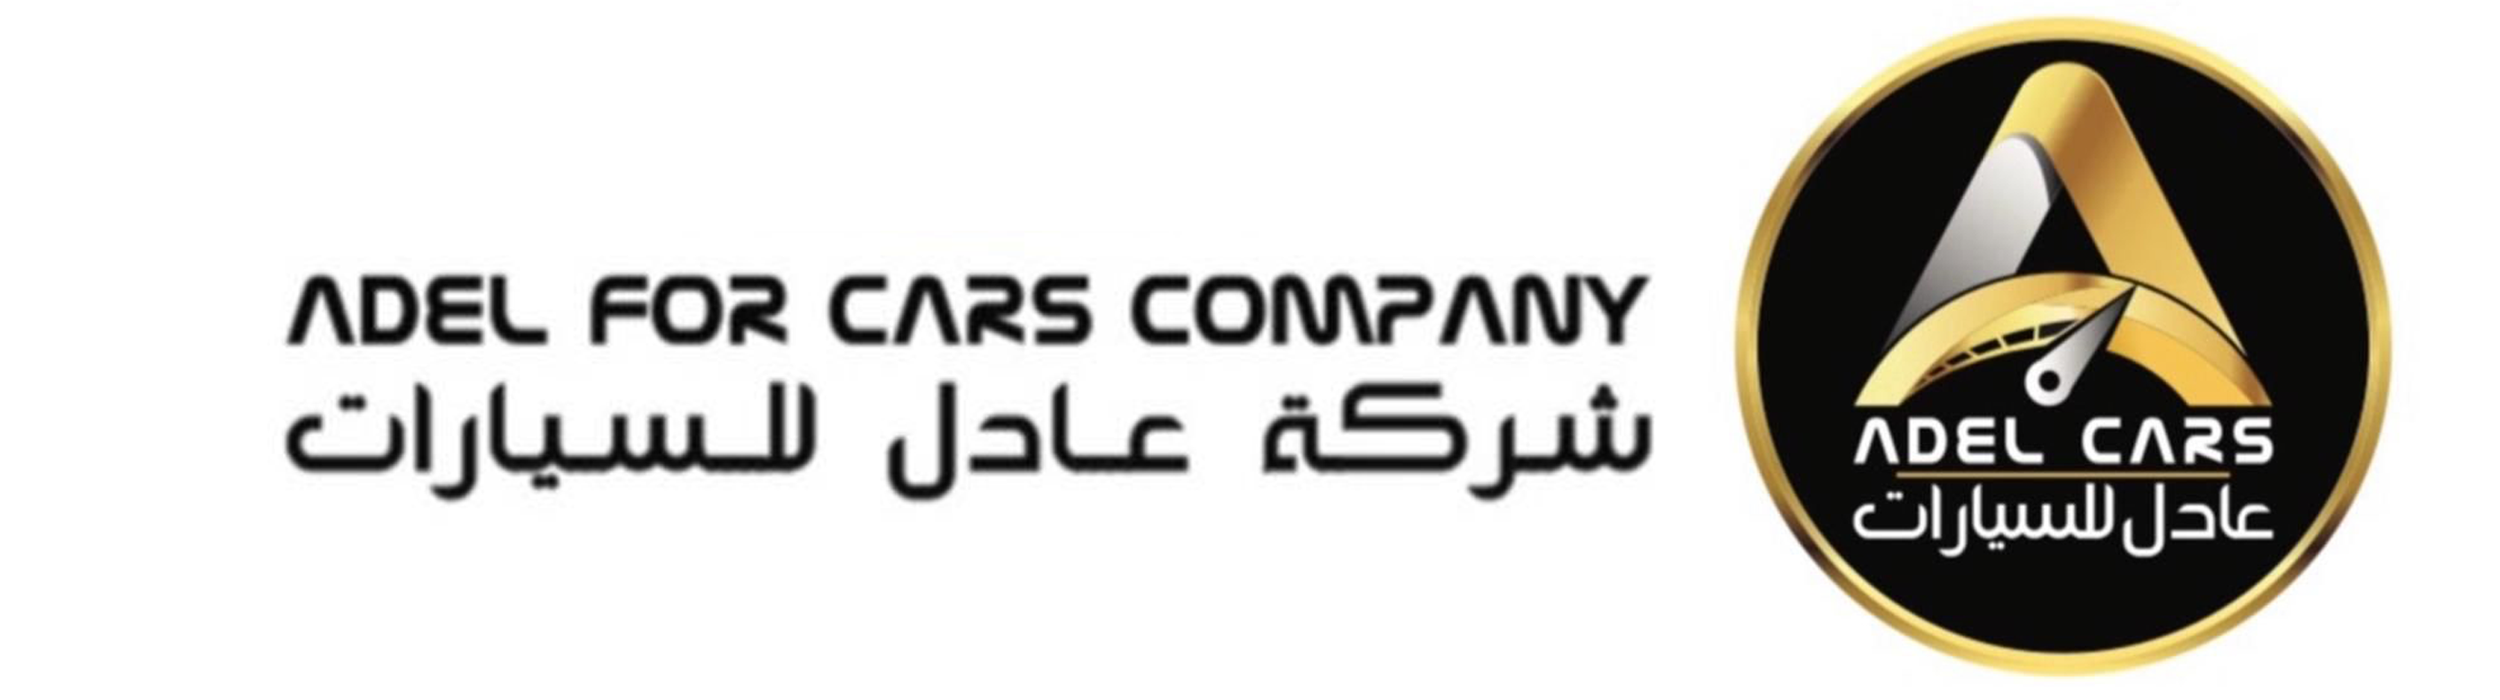 Adel cars logo